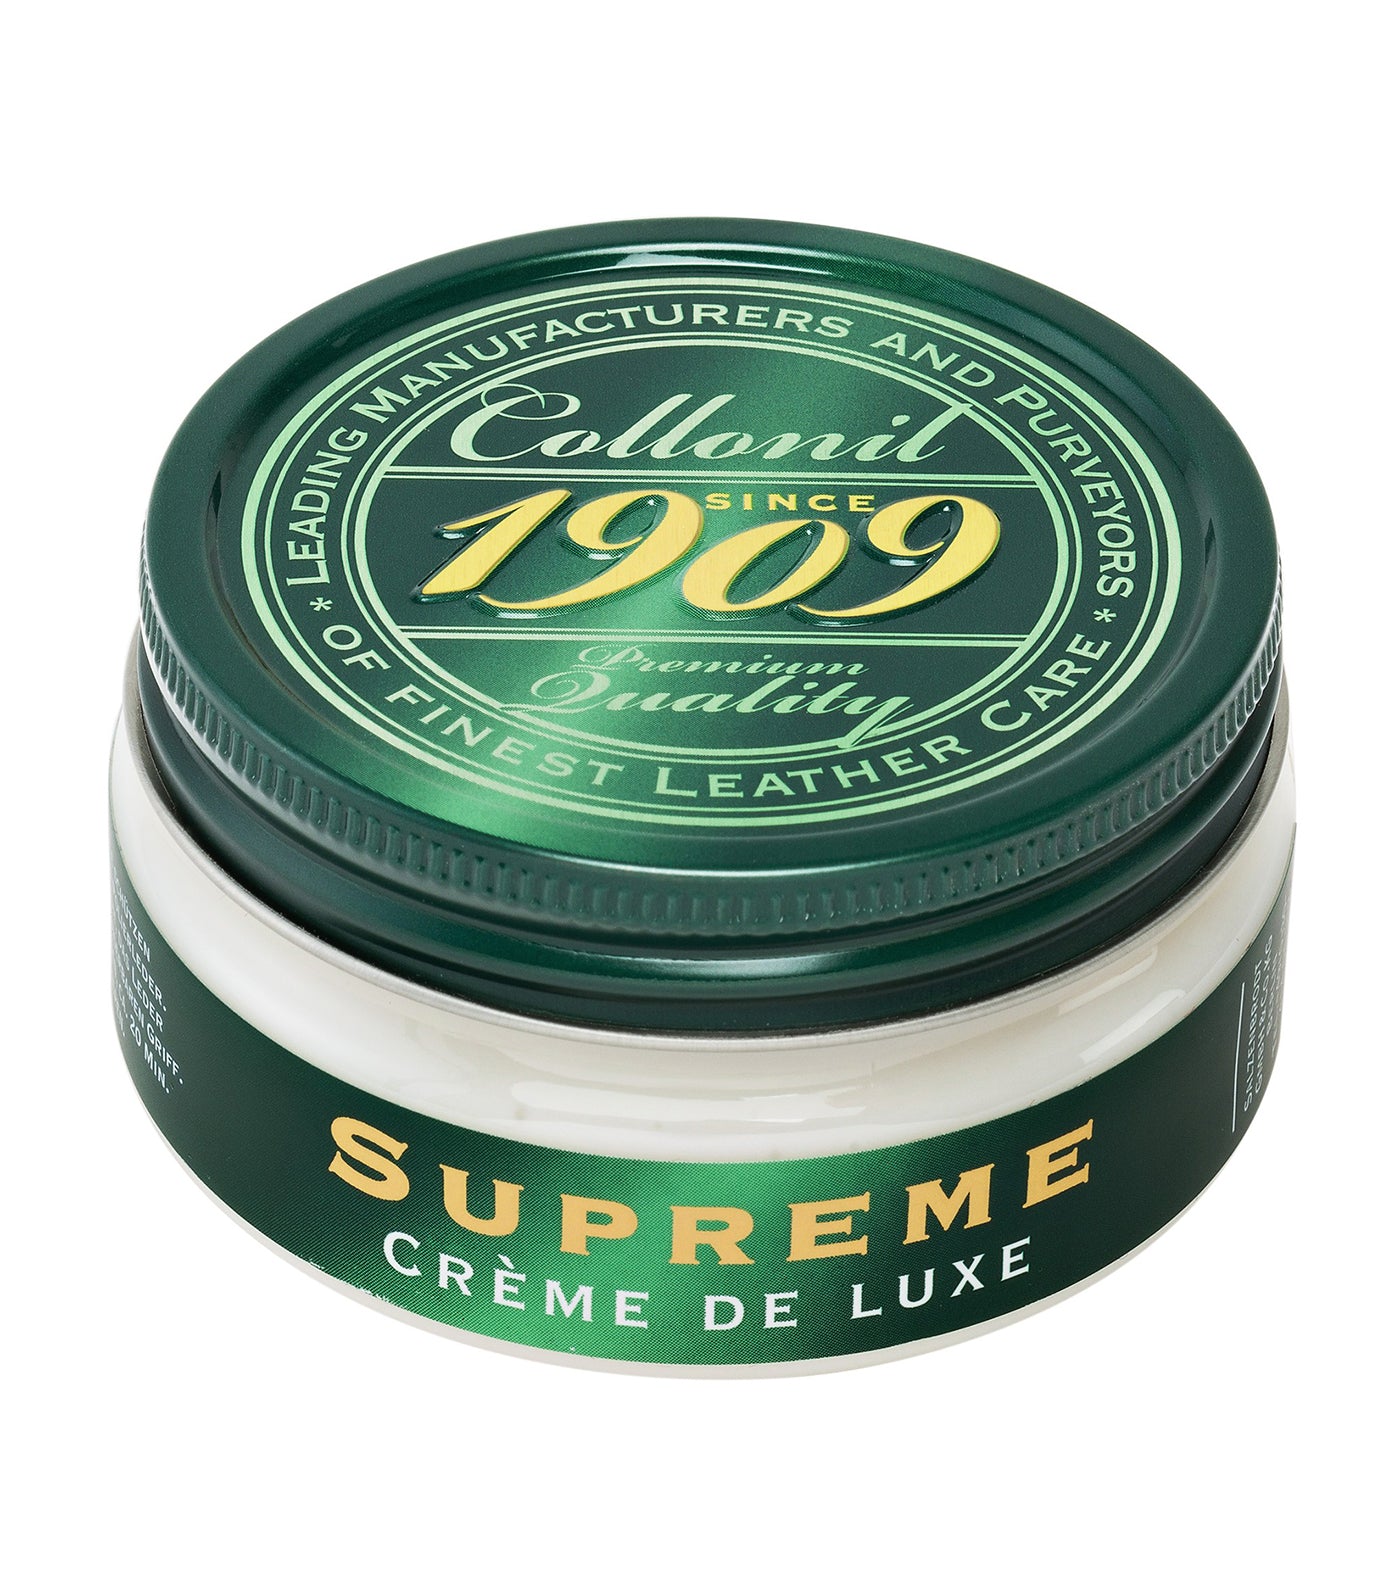 1909 Supreme Creme de Luxe 100ml